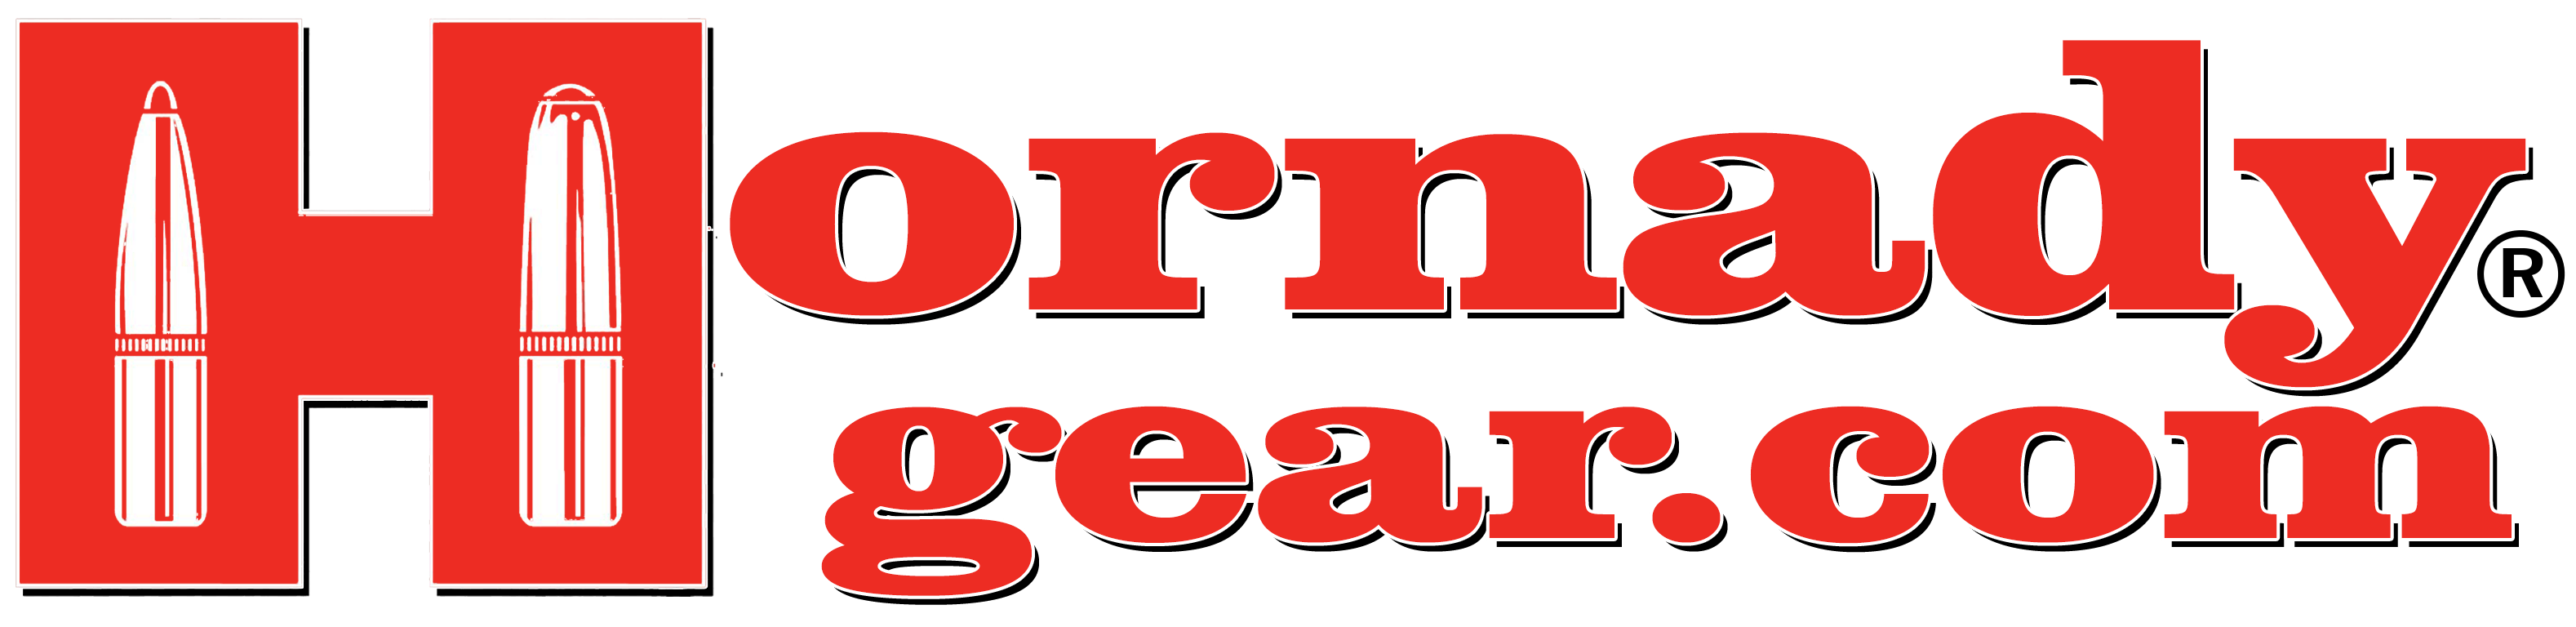 Team Hornady Logo - Shop Hornady® Gear